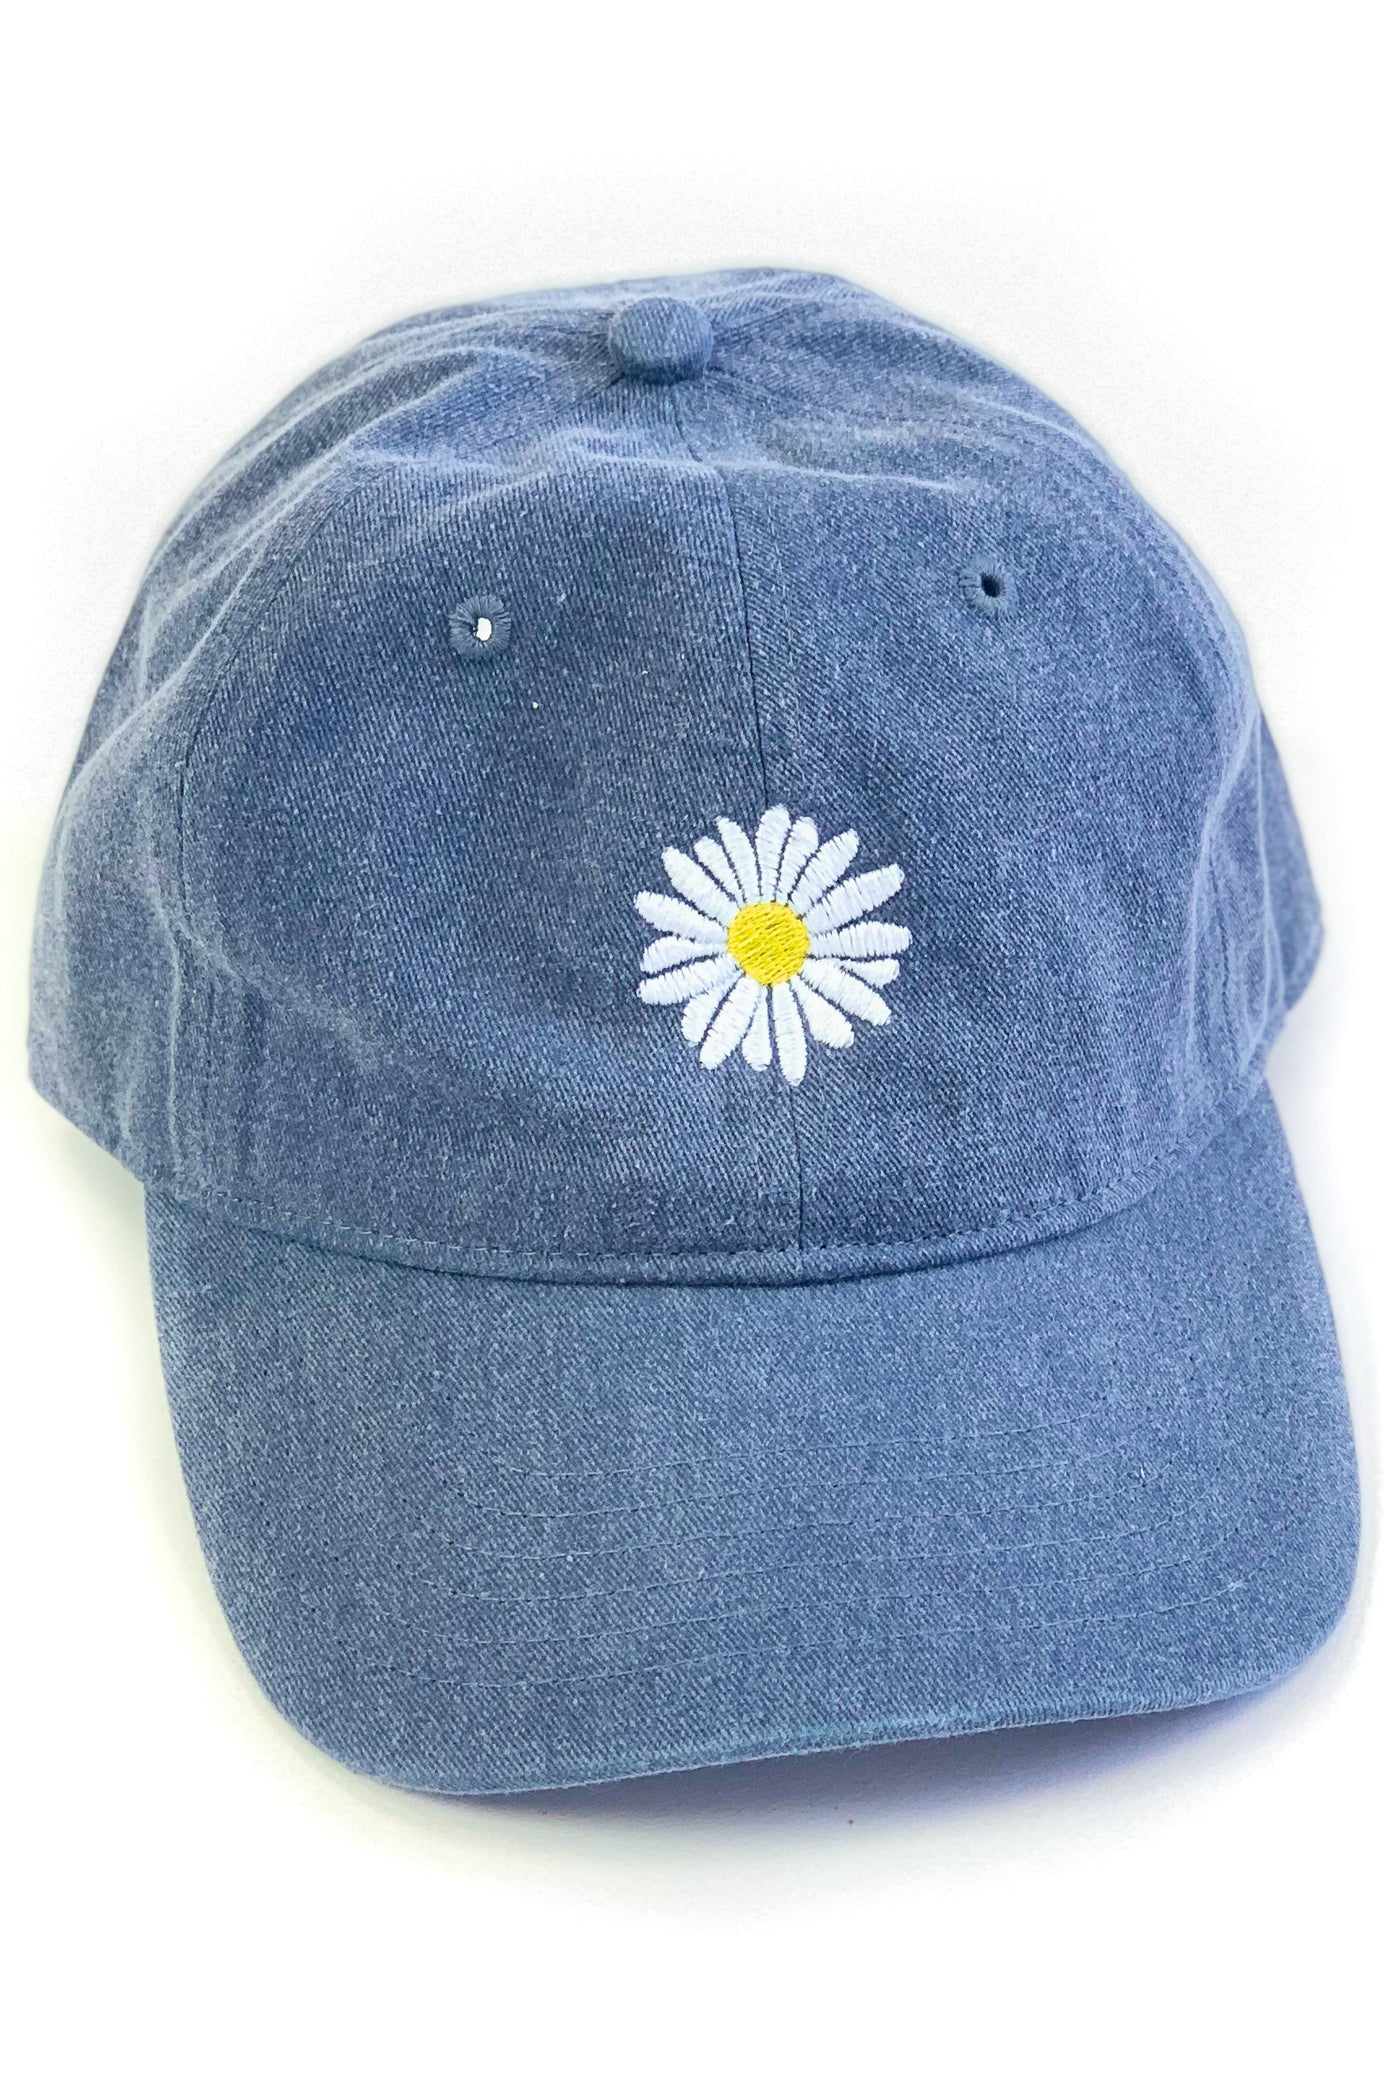 "Fresh As A Daisy" Embroidered Ball Cap